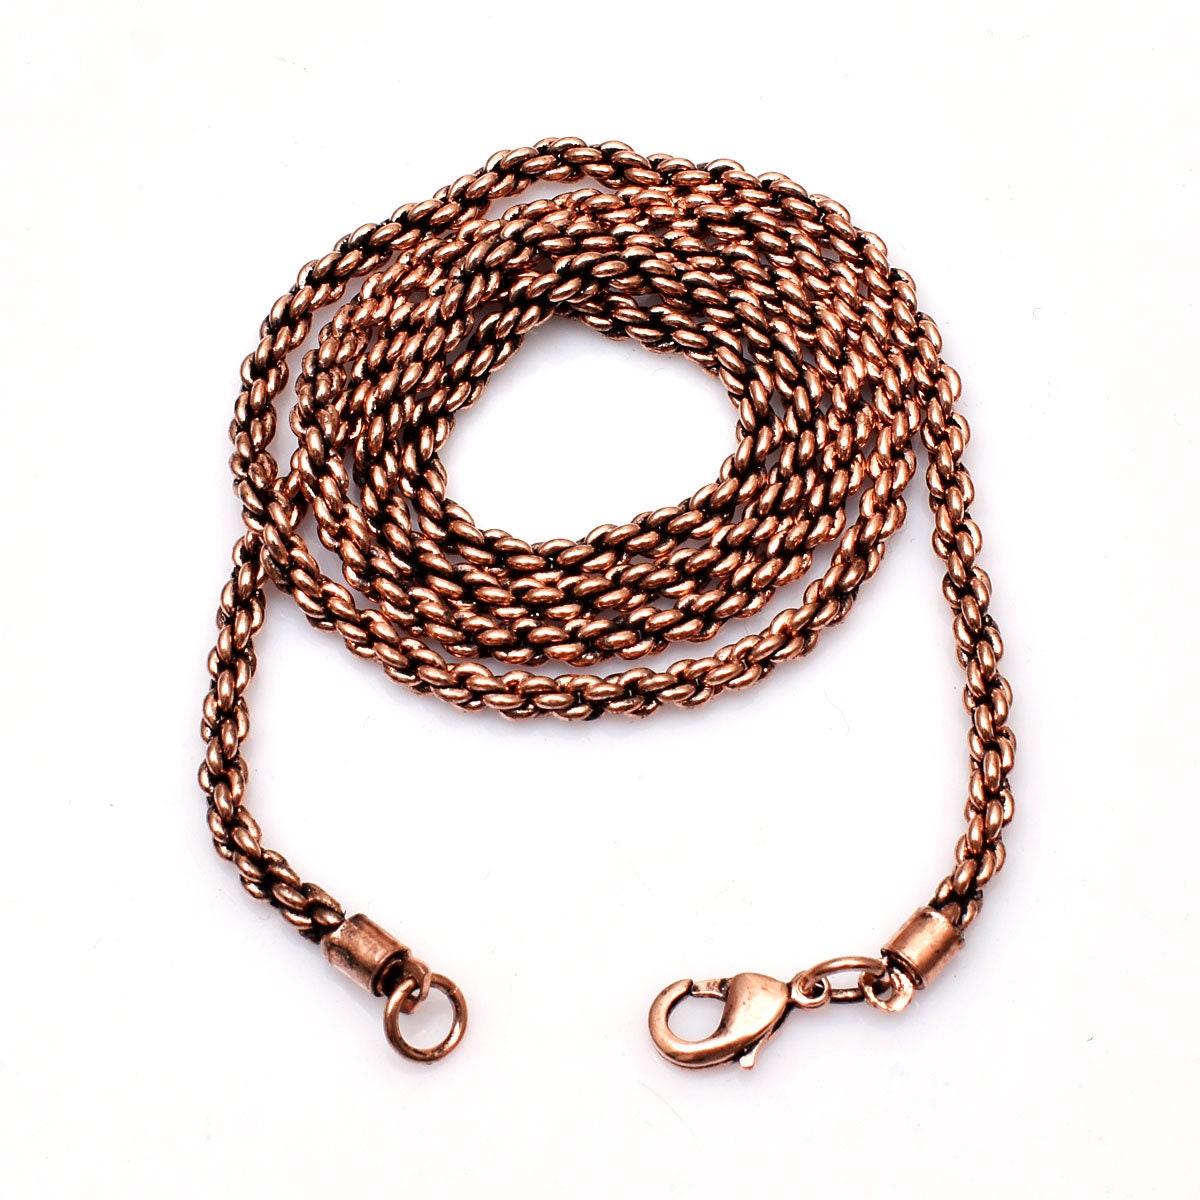 Copper Chain Necklace Pure Copper Chain Handmade Jewelry Chain for Pendant Pure Copper Jewelry Gift for Men Lobster Claw Chain Stylish Chain